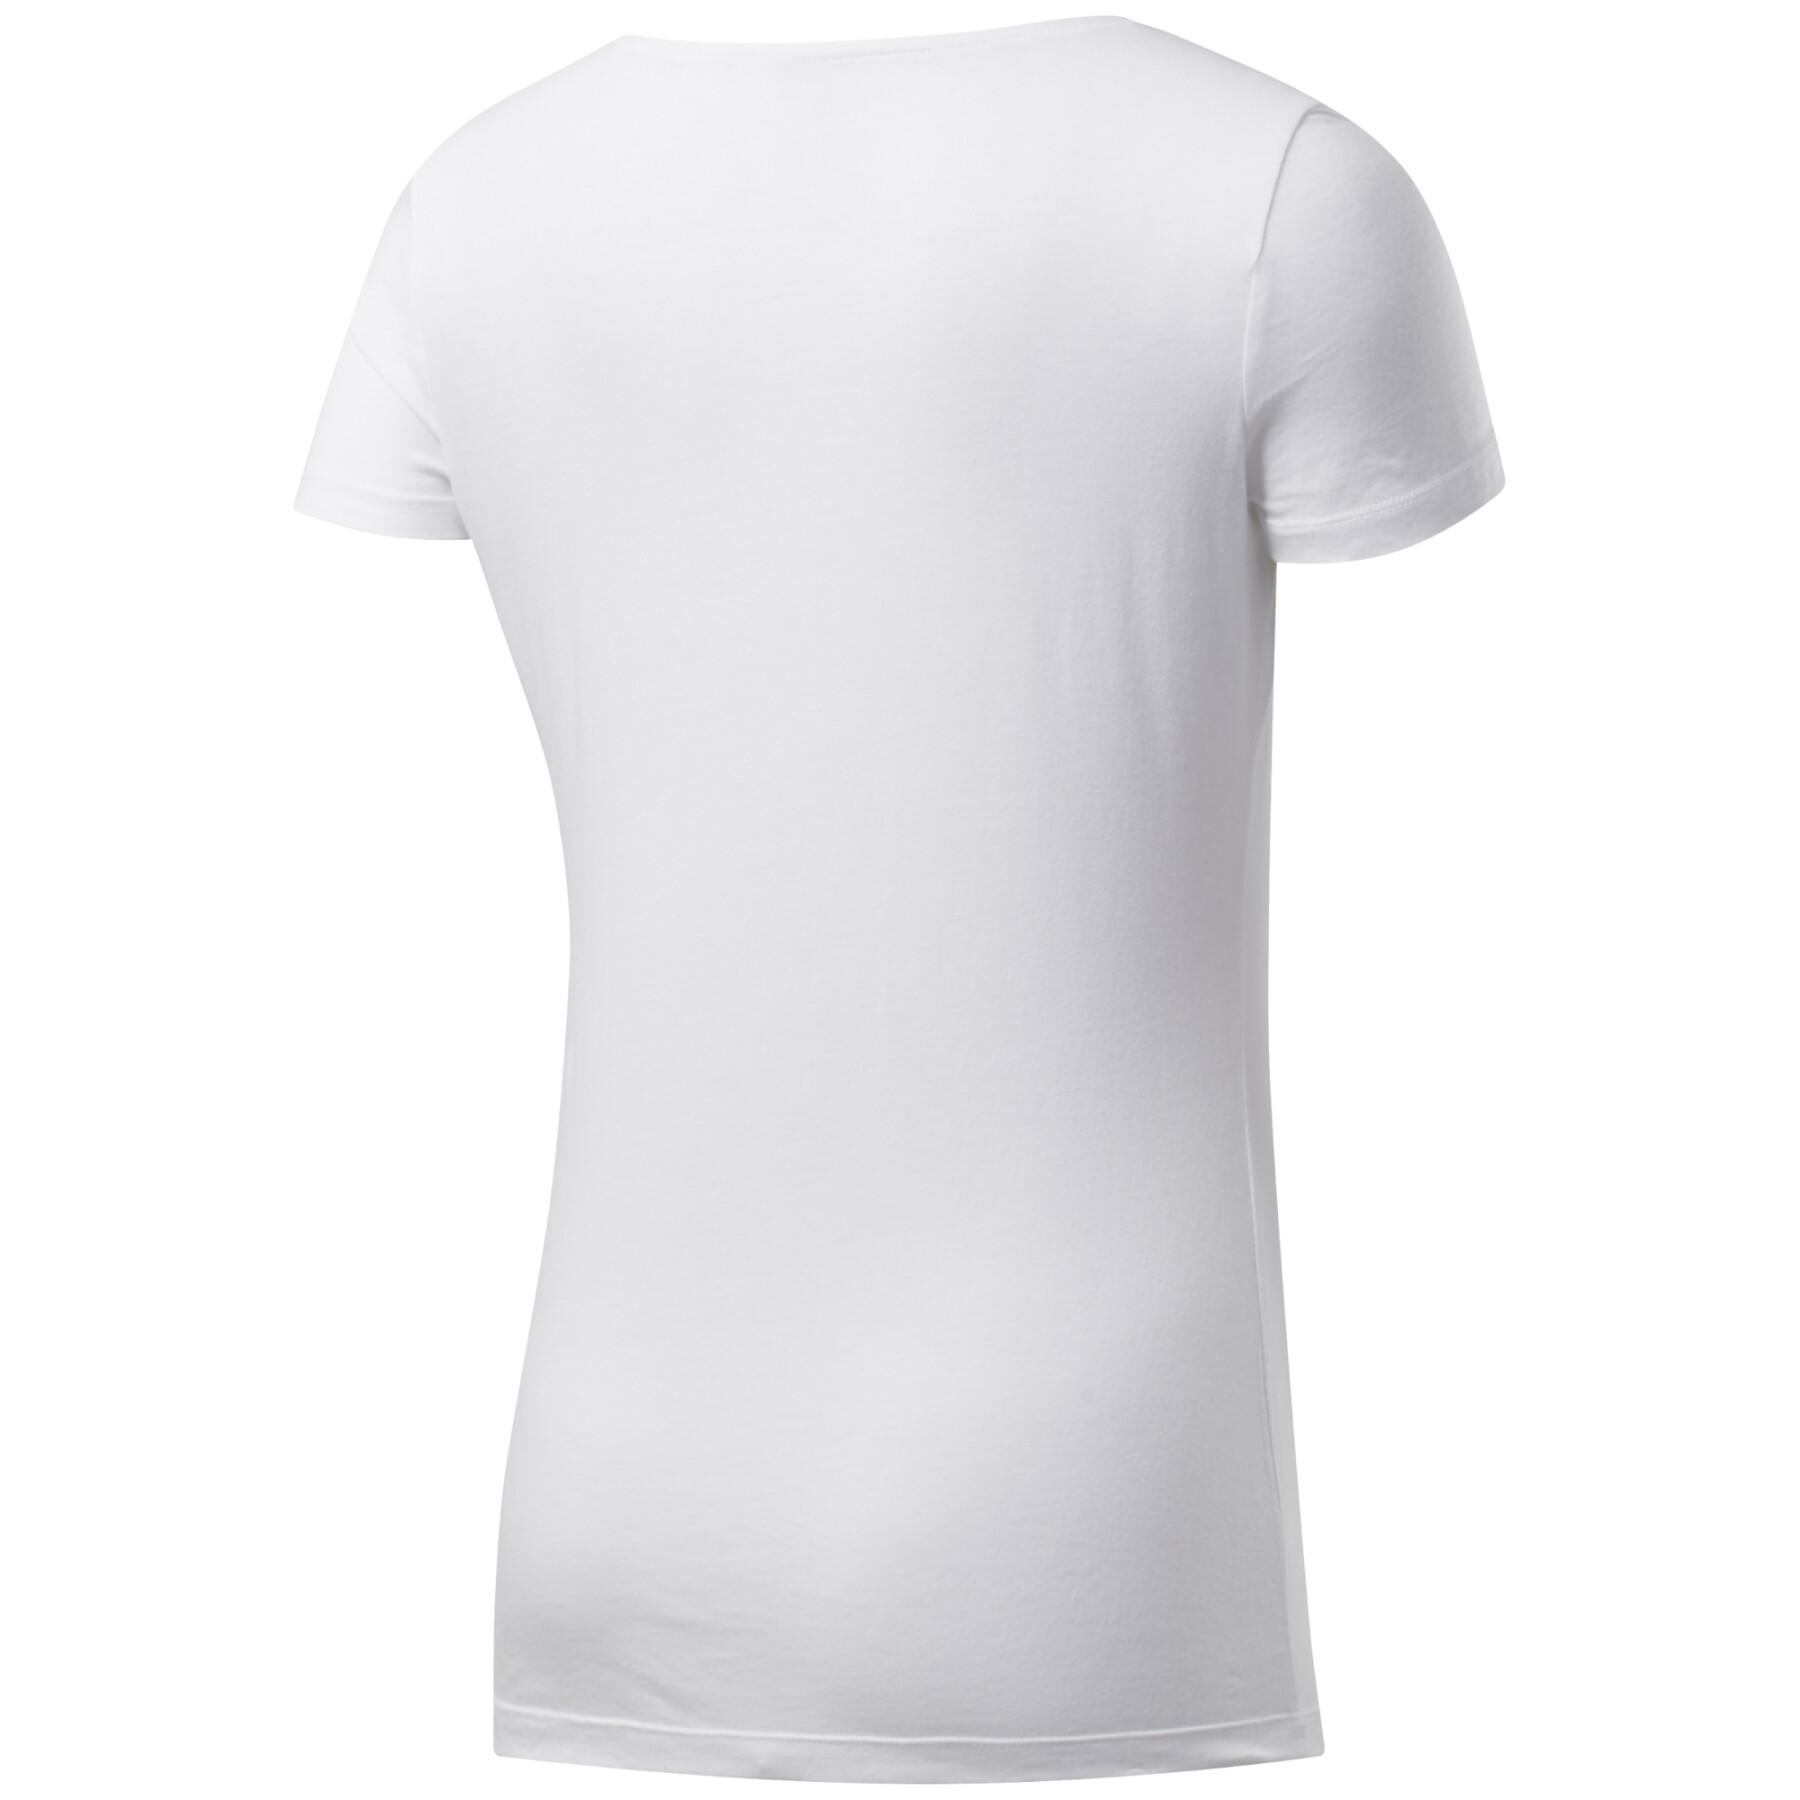 T-shirt femme Reebok Essentials Graphic Vector